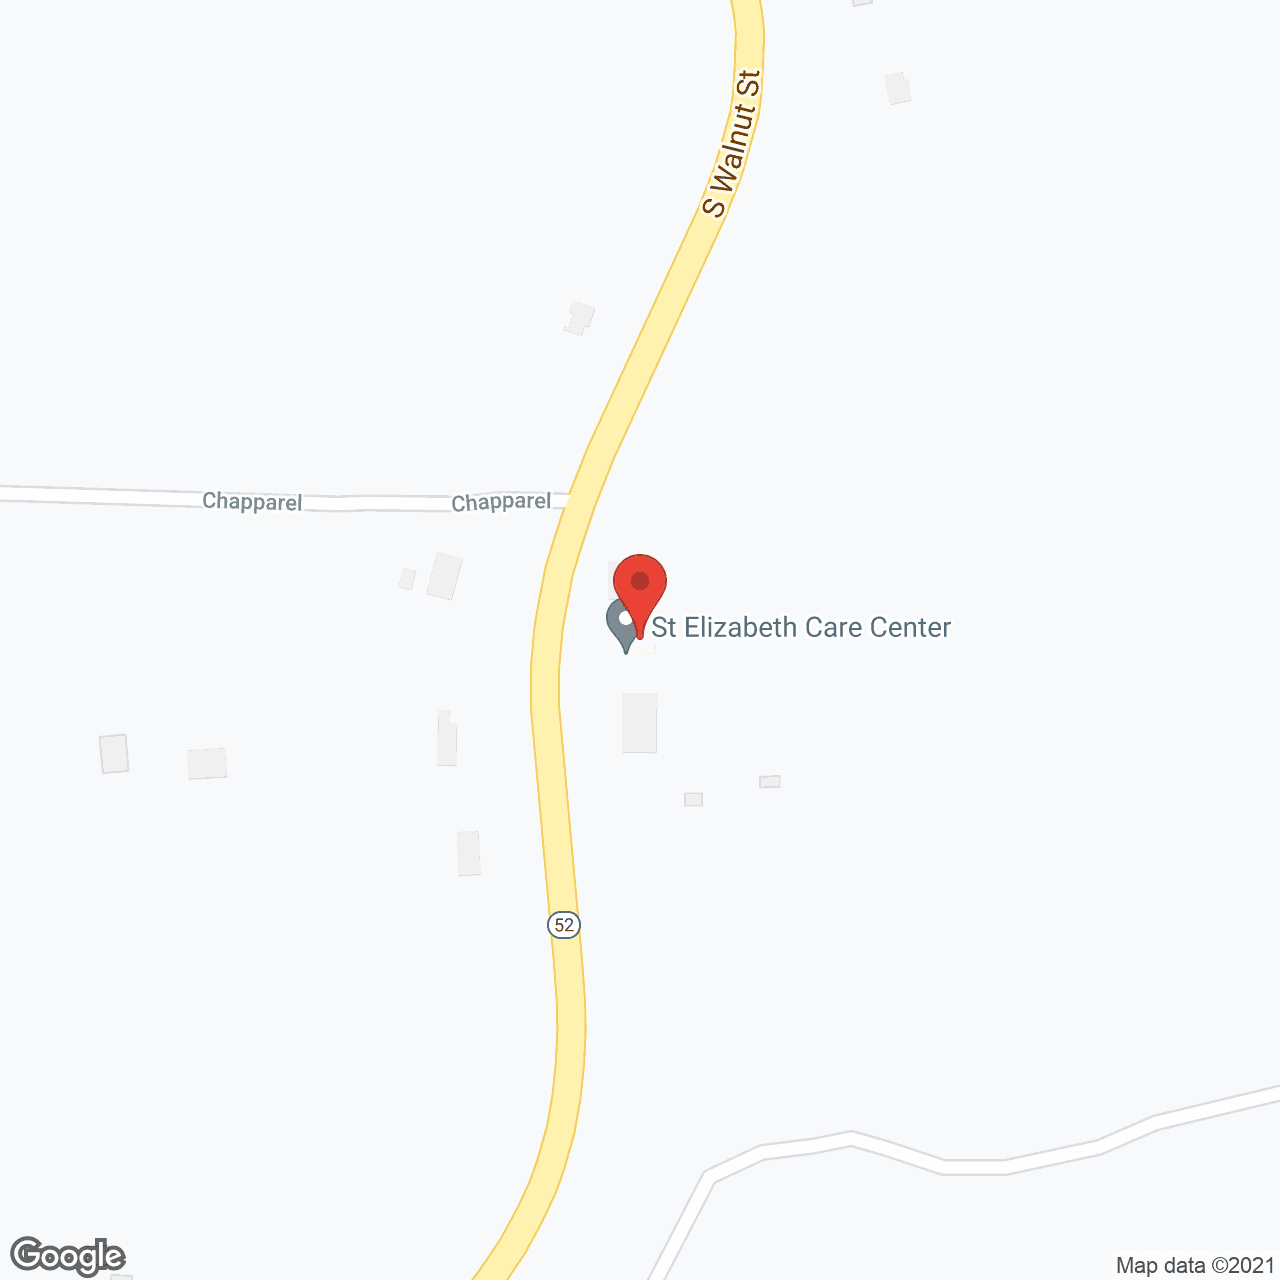 St Elizabeth Care Ctr in google map